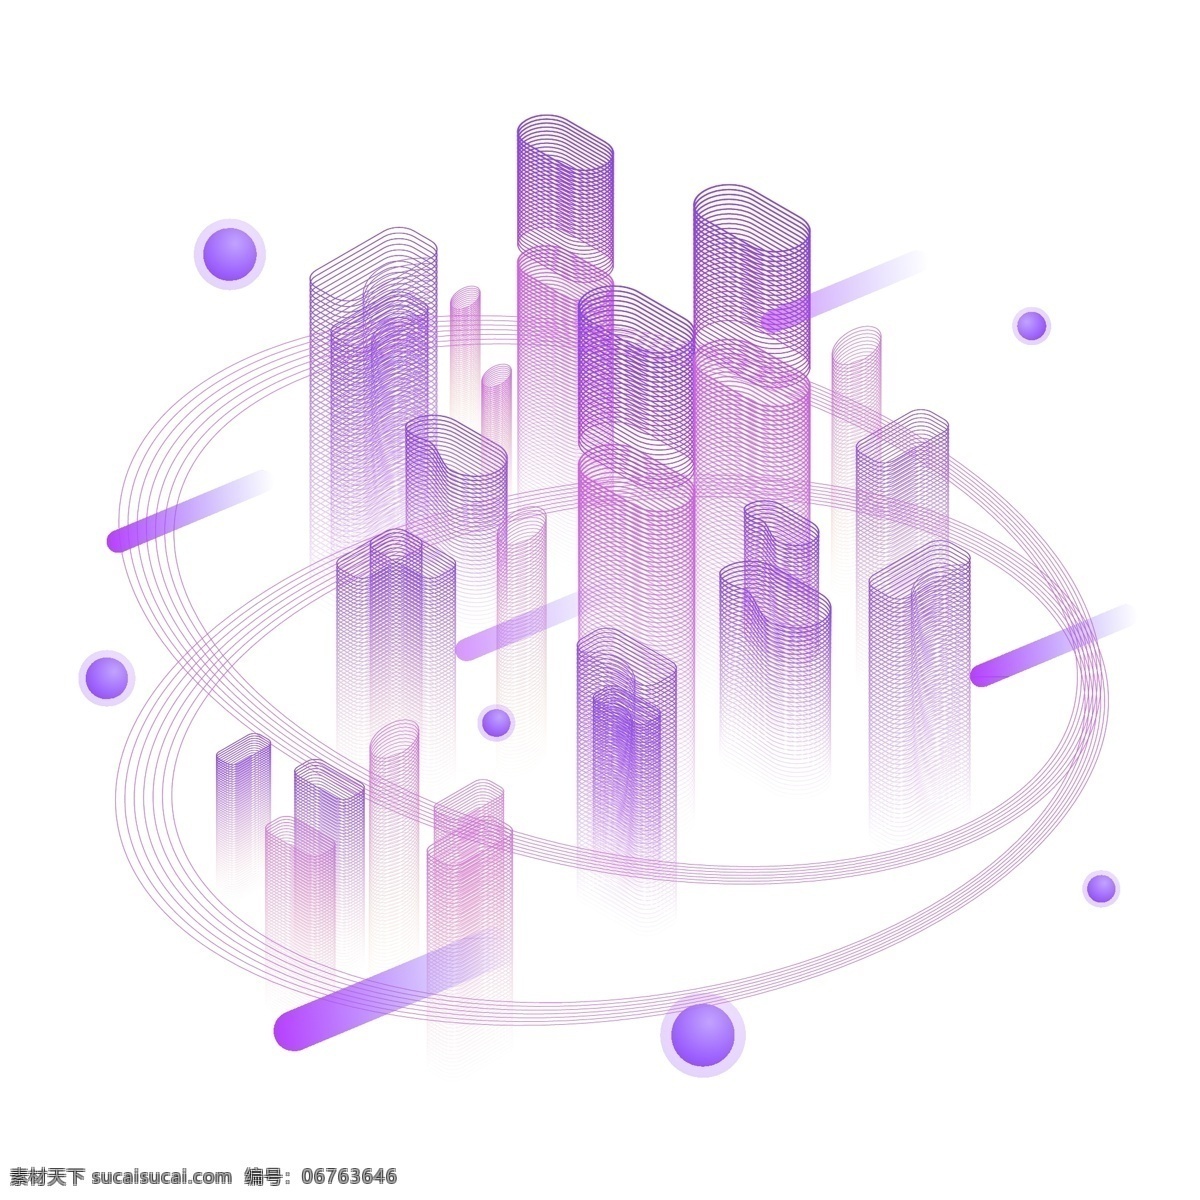 d 科技 感 线条 立体 未来 城市 商用 元素 建筑 信息 渐变 线性 智能 智慧 技术 空中城市 透气感 矢量